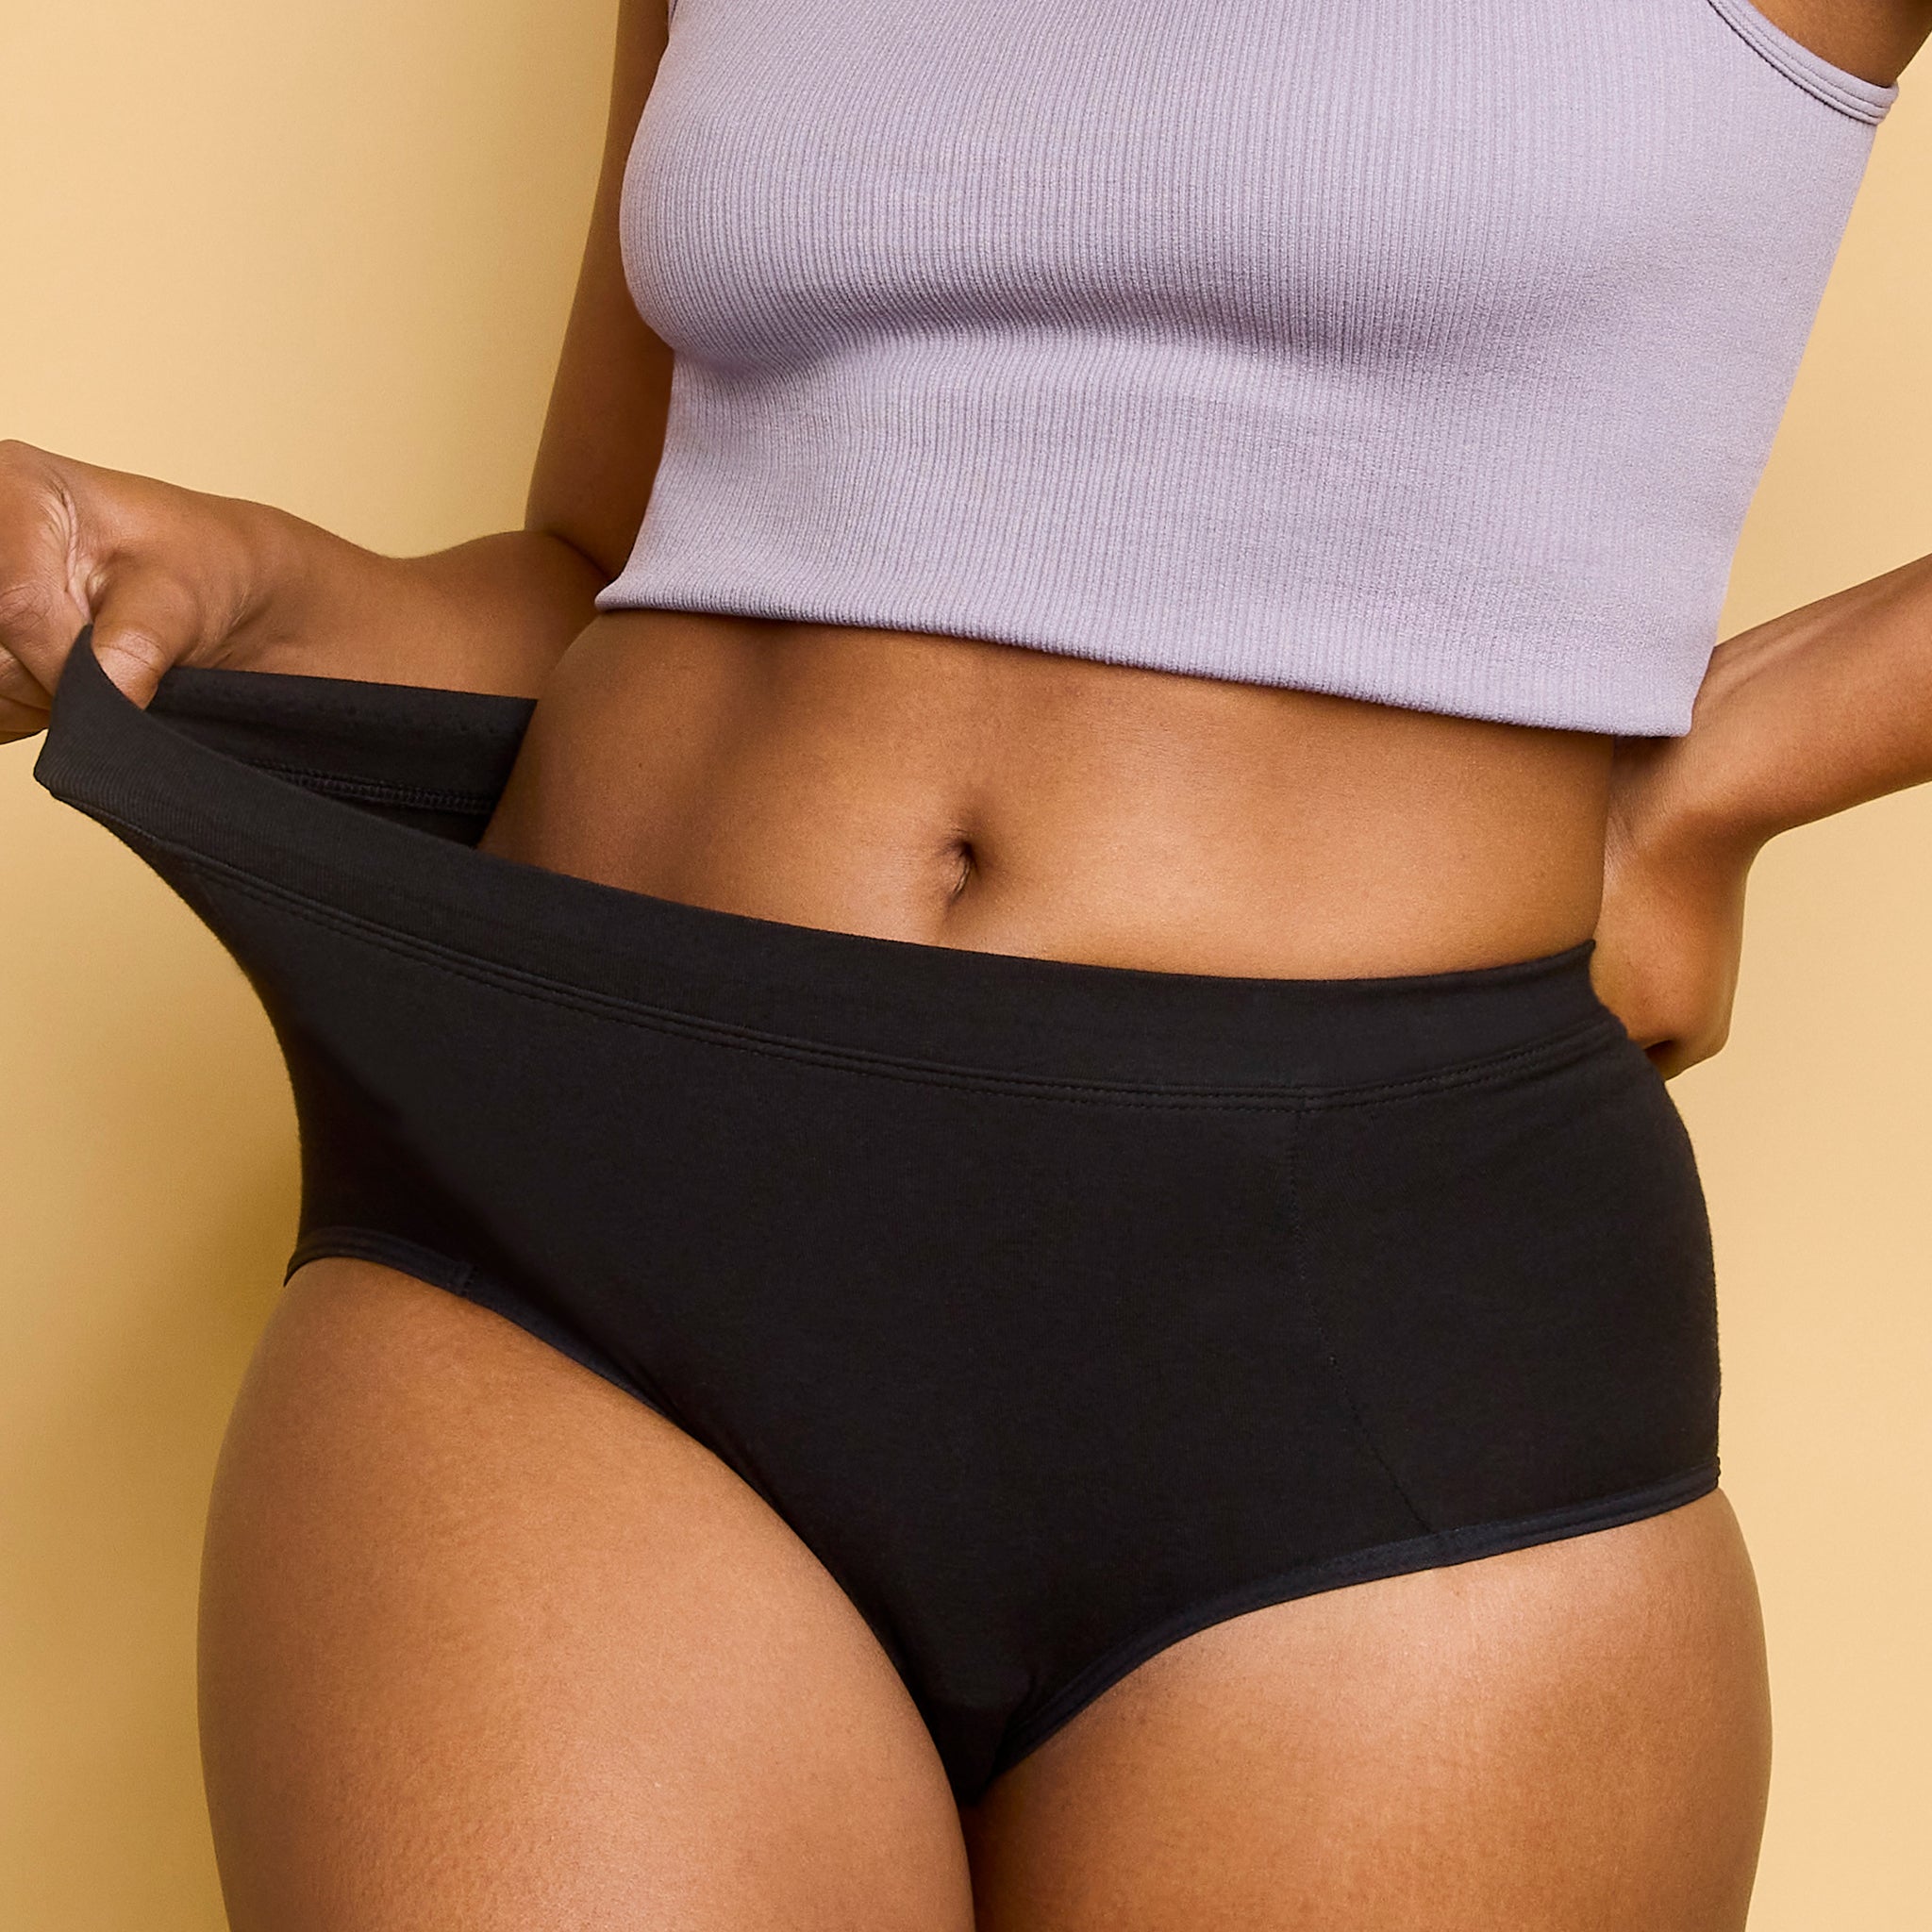 High-Waist Reusable Period Underwear, Period Panties